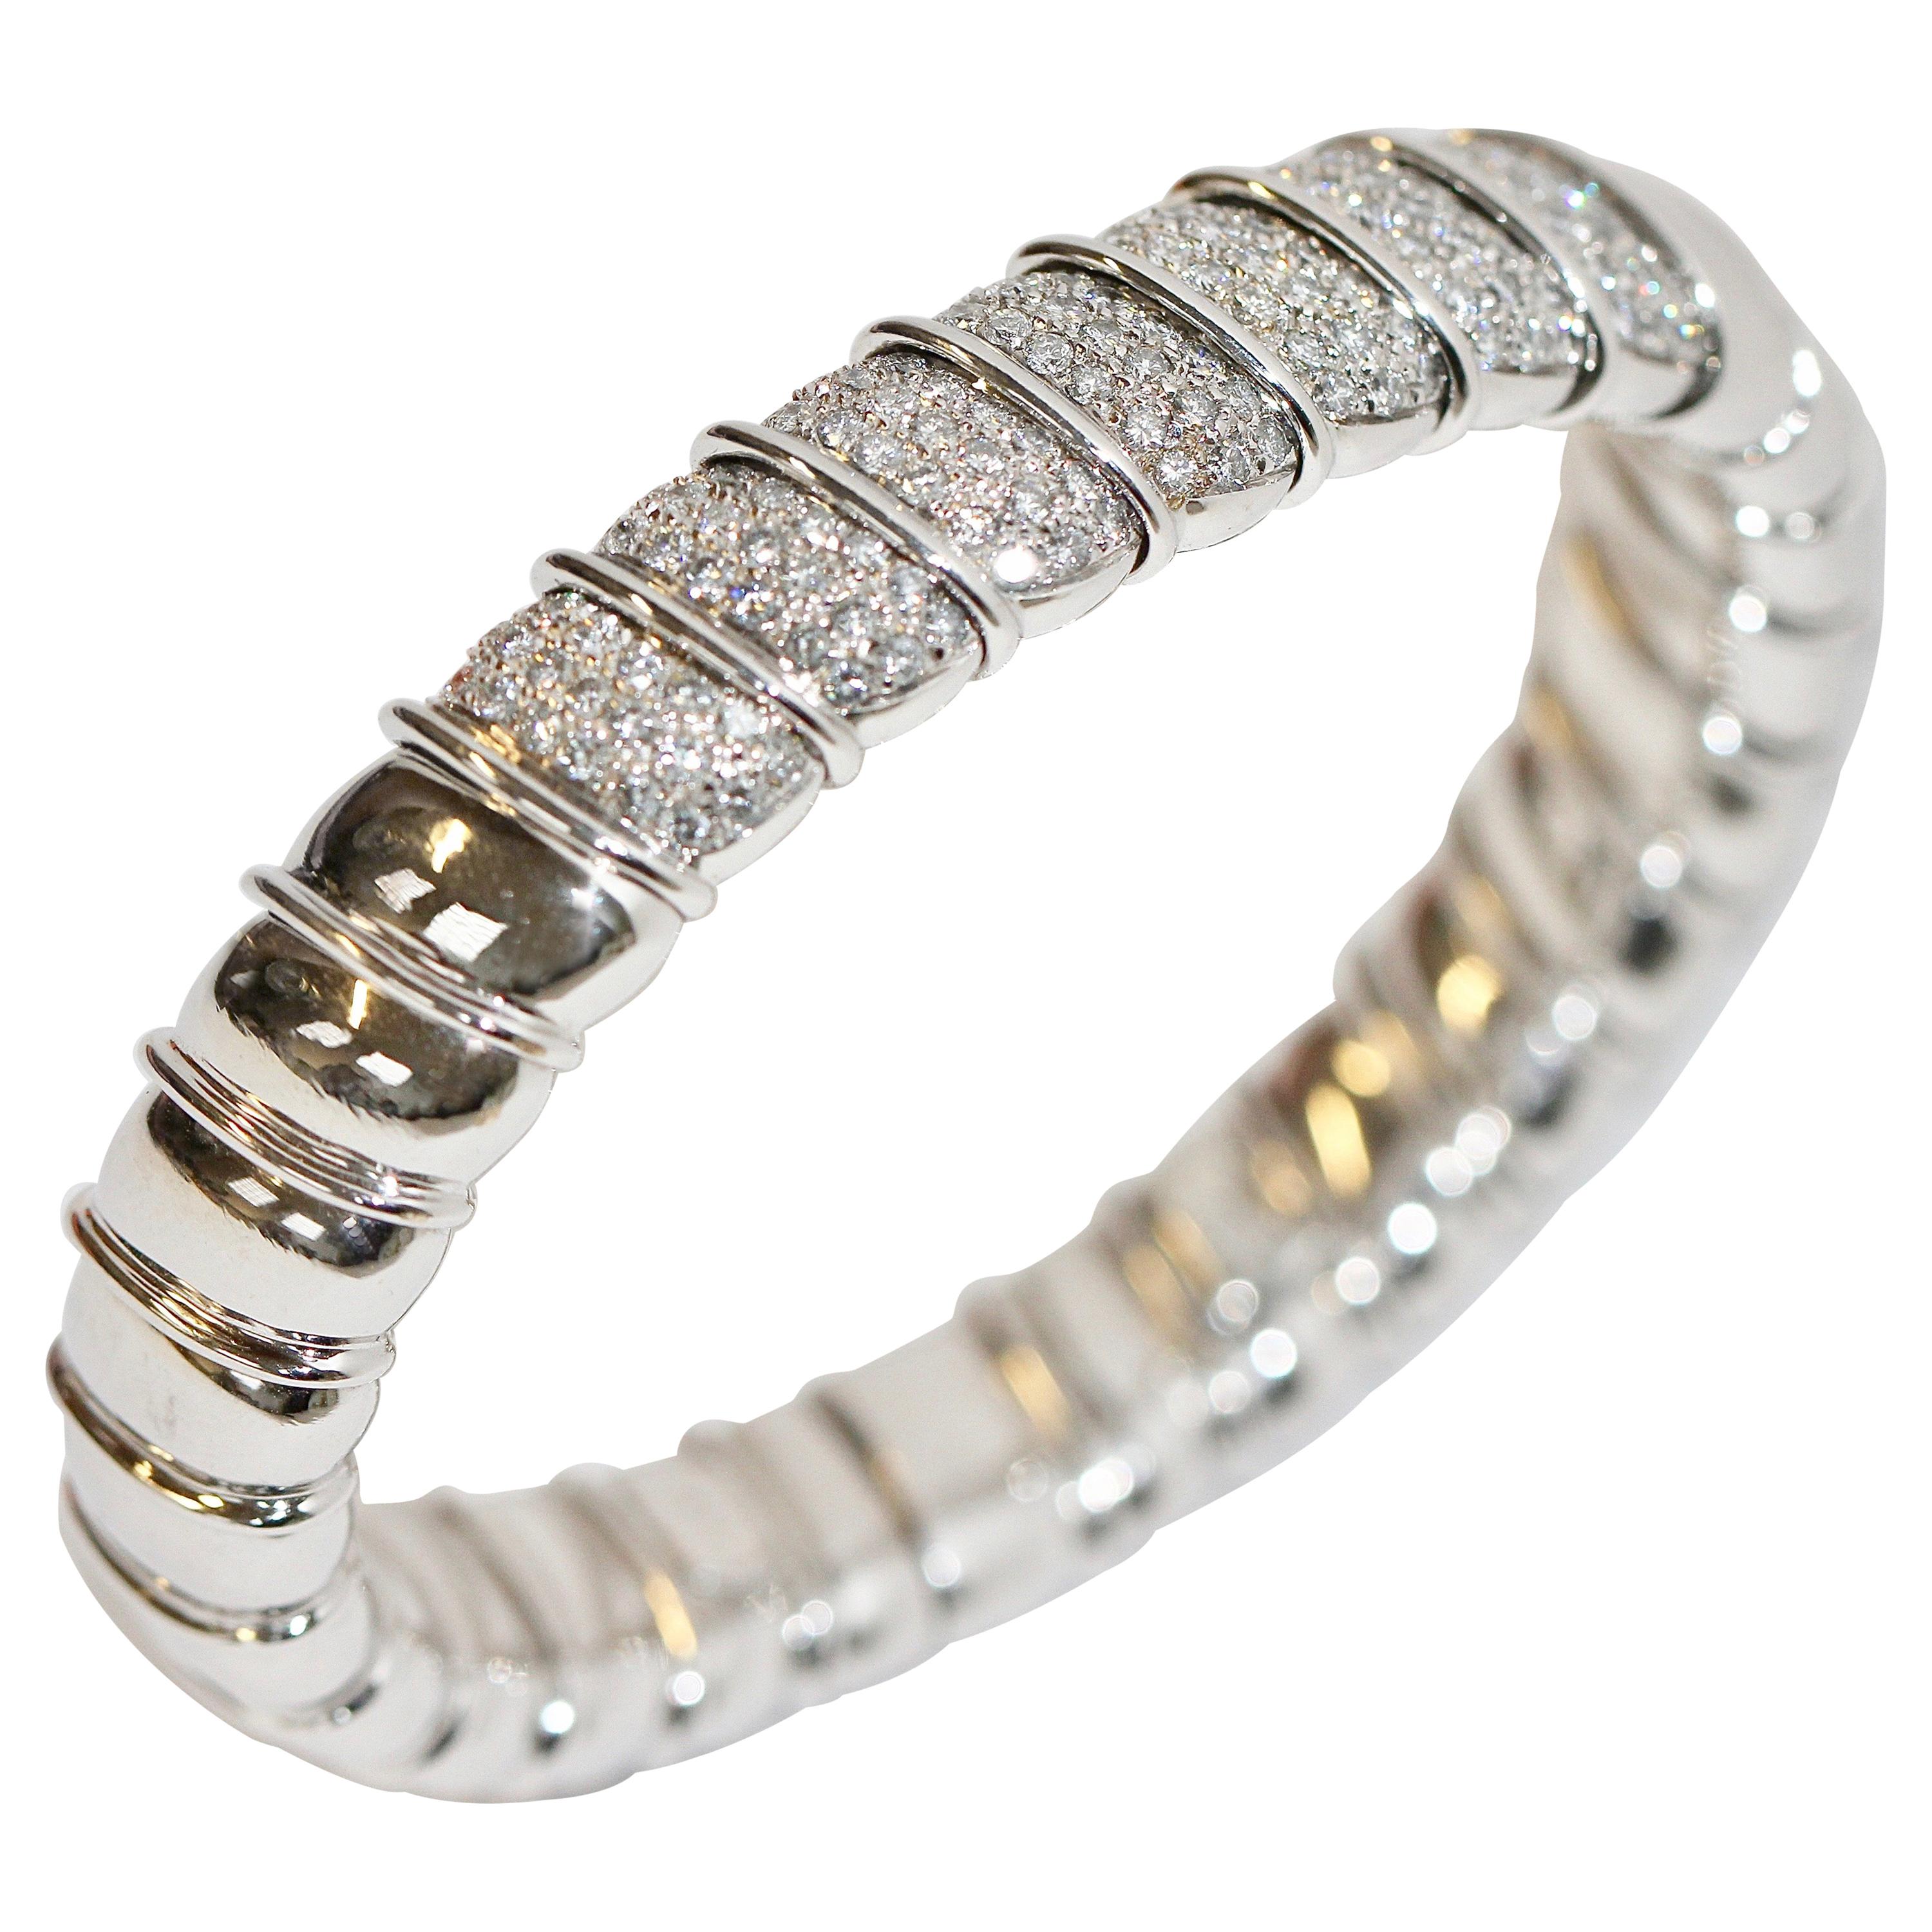 Bracelet de luxe en or blanc massif 18 carats serti de diamants